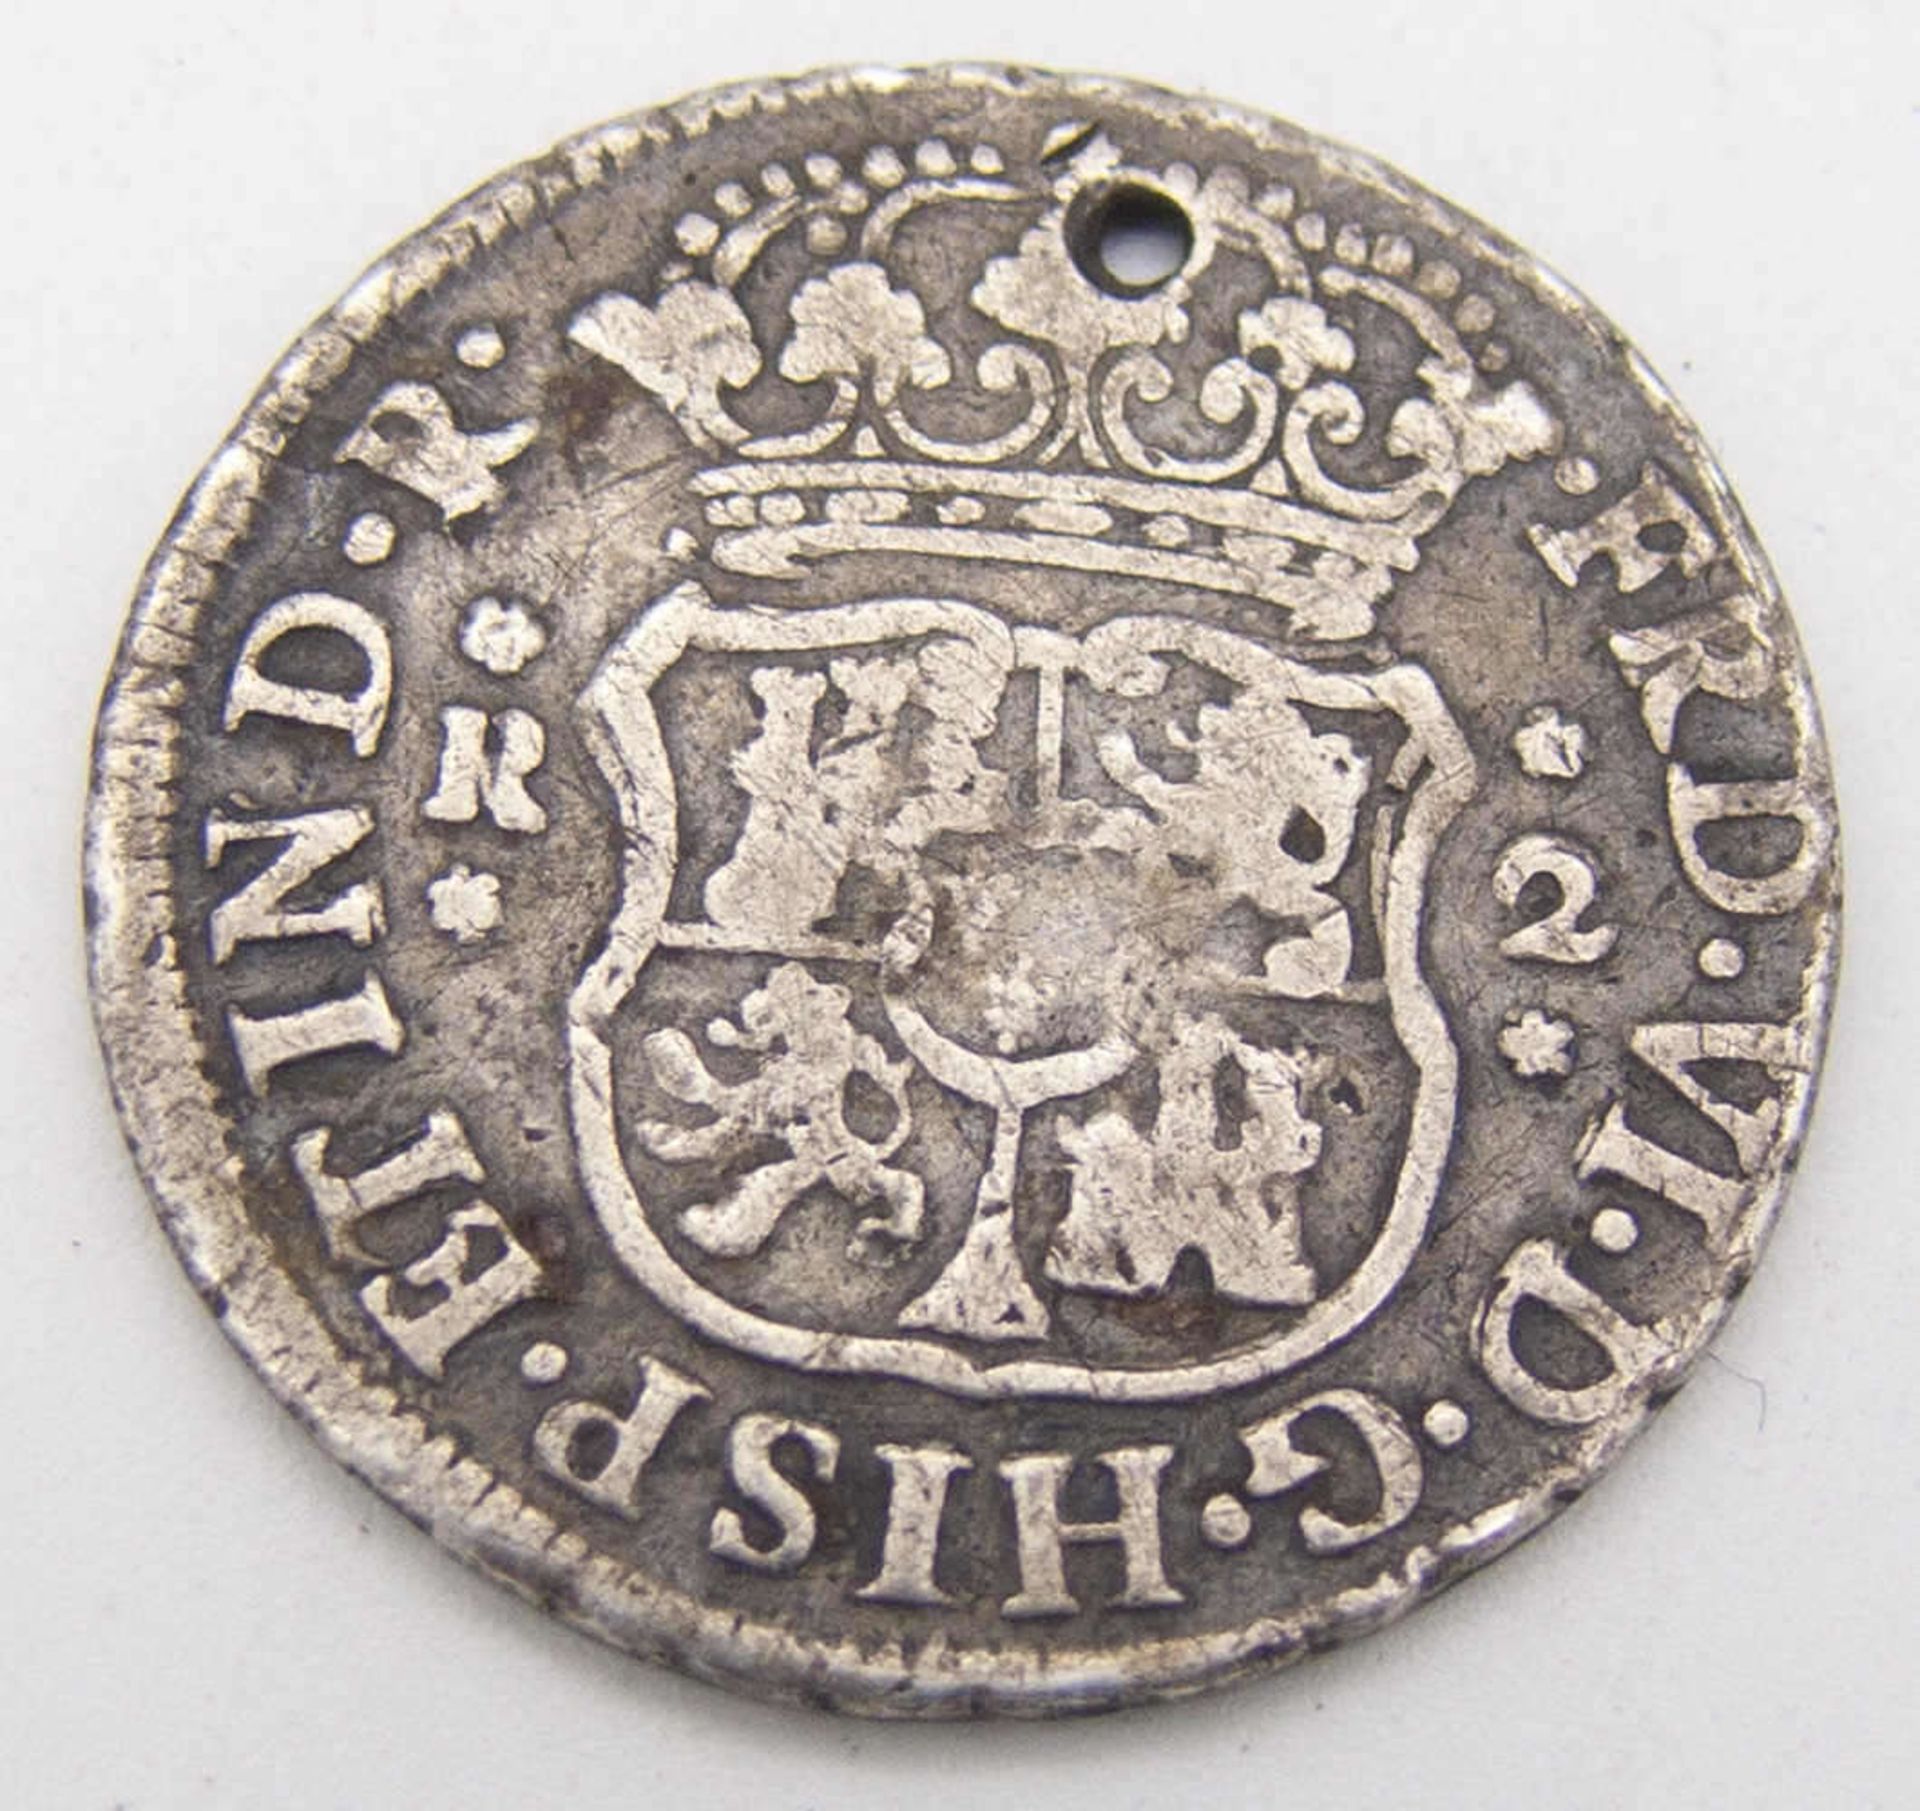 Spanien 1750, 2 Real - Silbermünze. Gelocht. Erhaltung: ss.Spain 1750, 2 Real - silver coin.